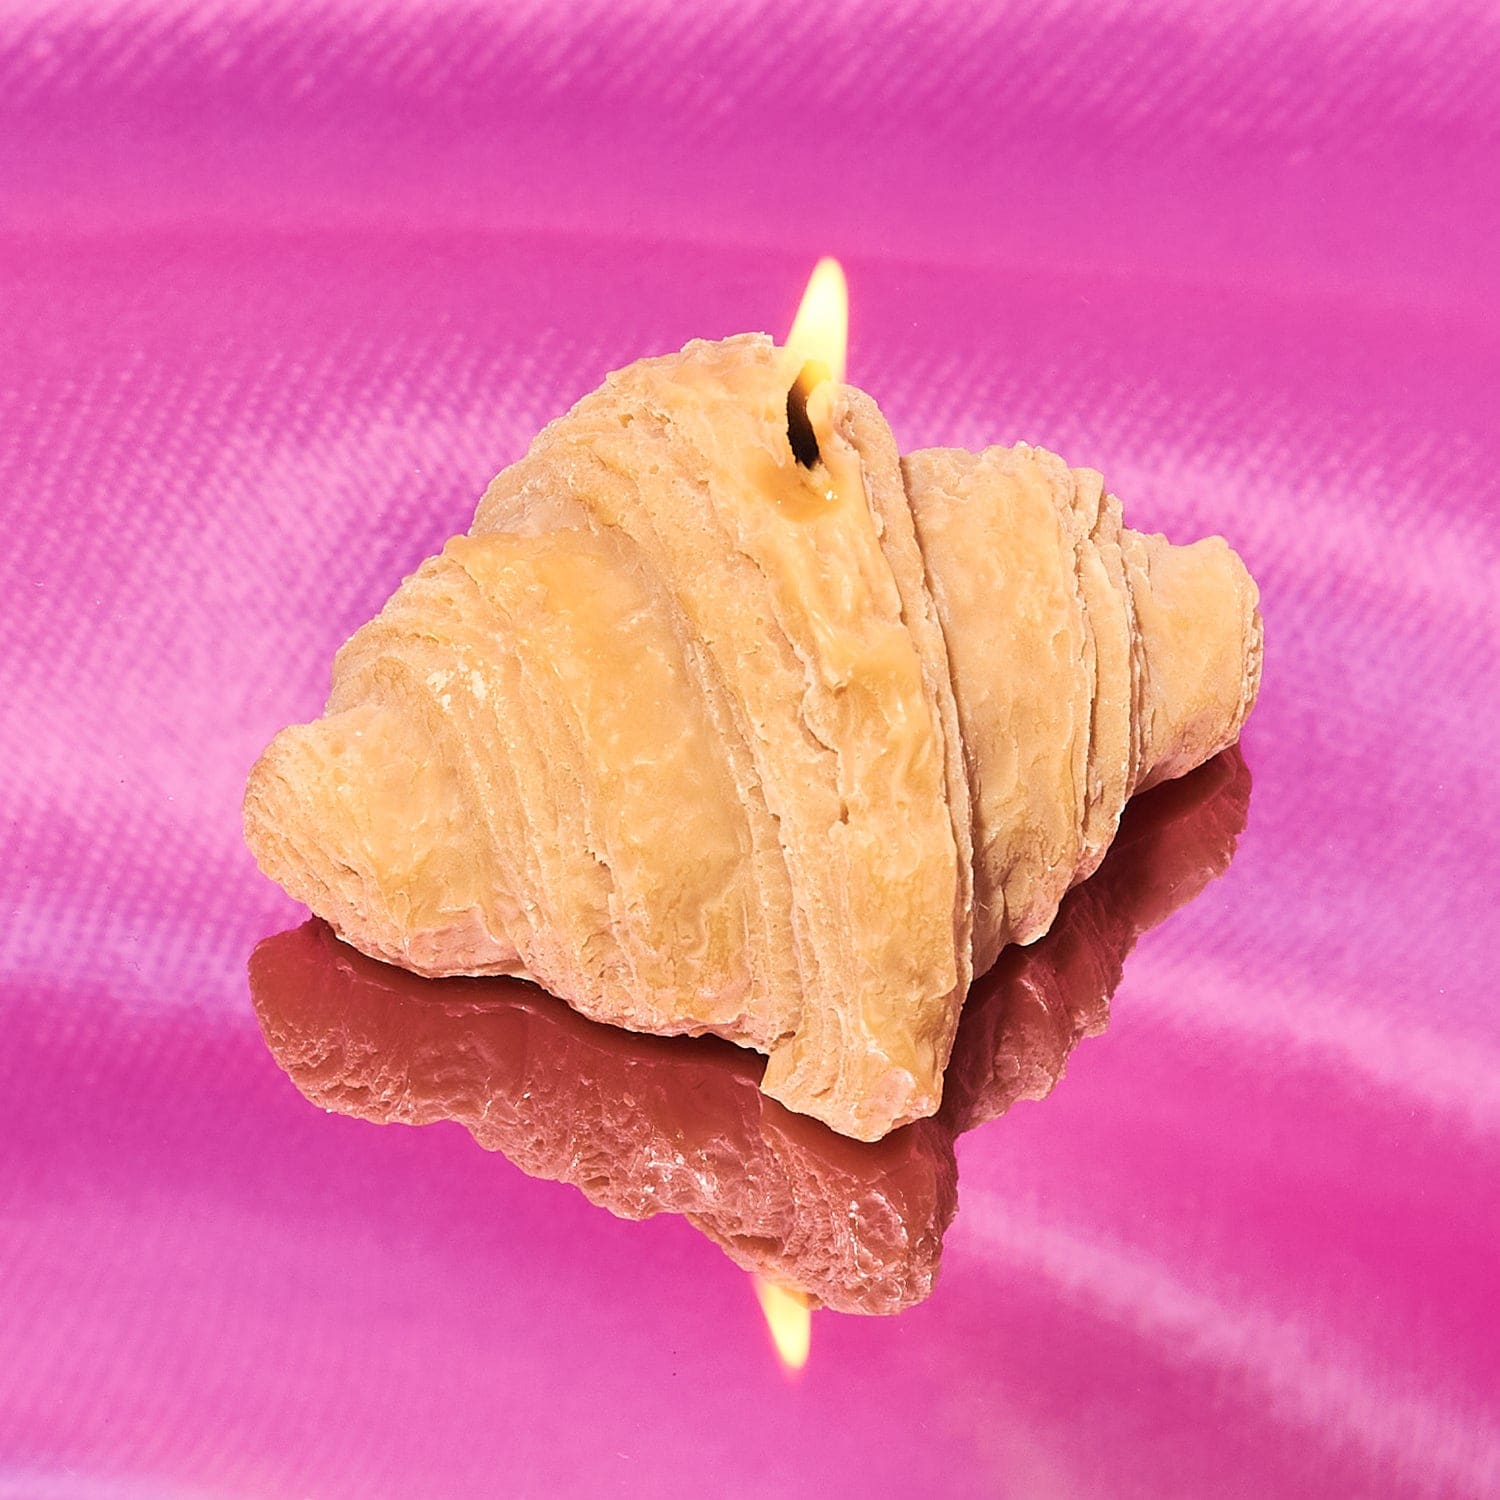 Croissant Candle Candle - Croissant - Fake Food - Sculptural